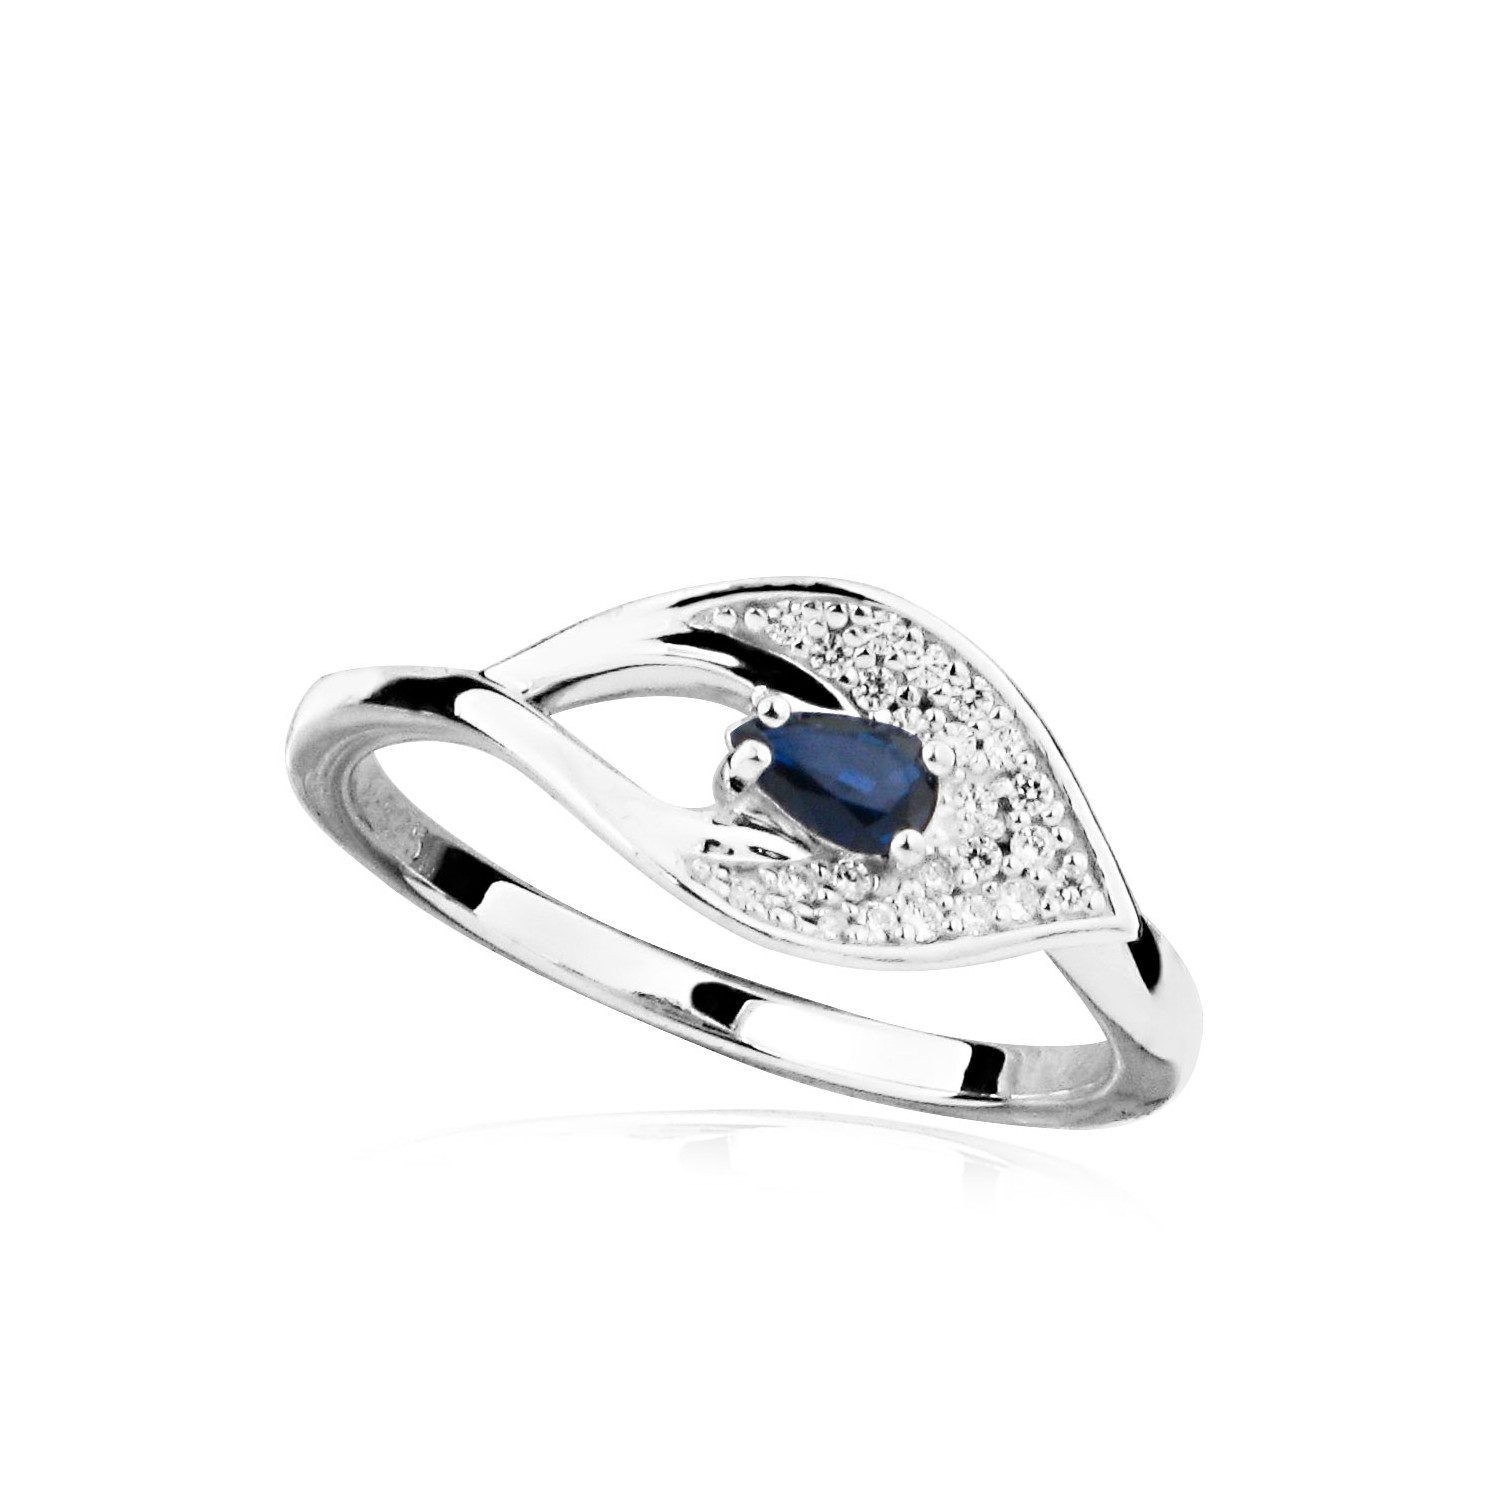 MOISS Moiss stříbrný prsten MARITA s MODRÝM SAFÍREM RG000057 Velikost 61 mm RG000060 + doprava ZDARMA